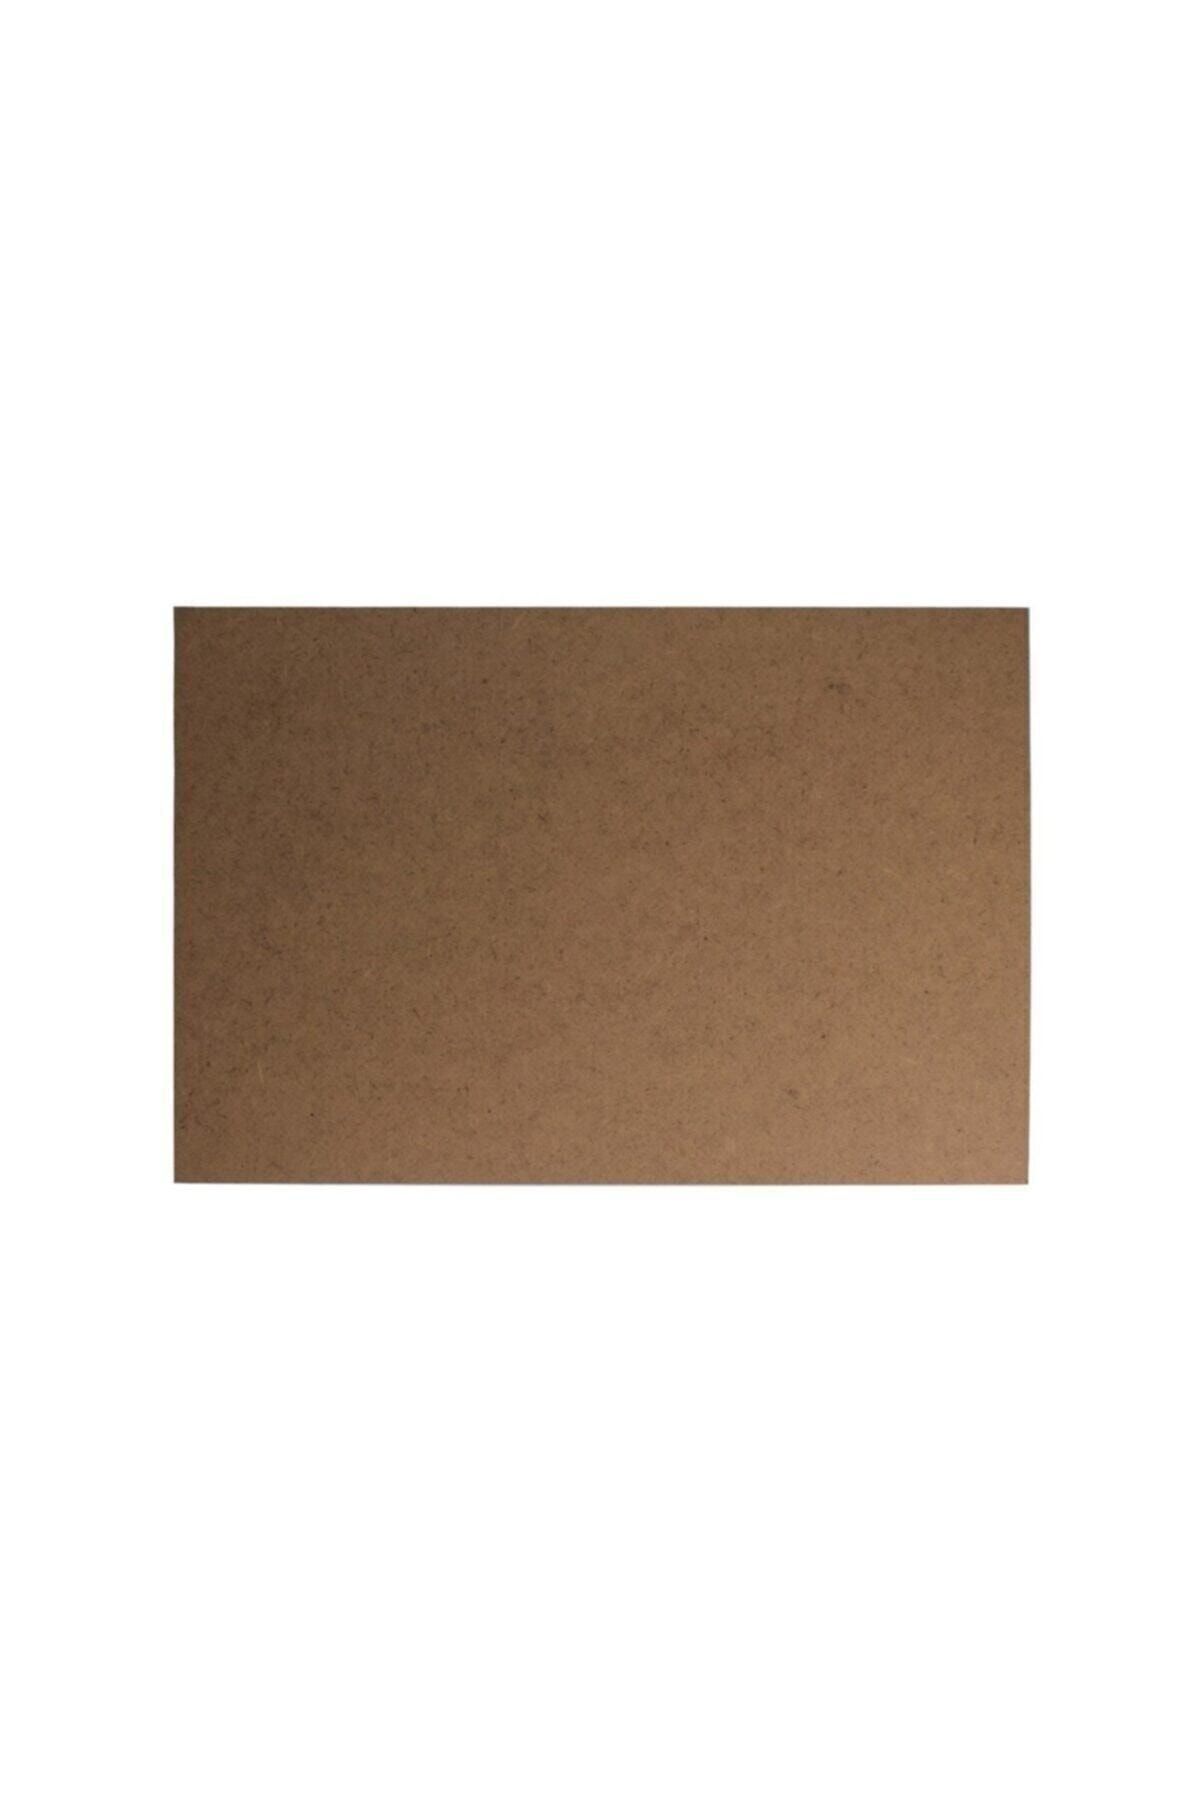 Ponart Duralit Mdf Levha 50x70 3mm Kalınlık -resim Altlığı Veya Puzzle Zemini